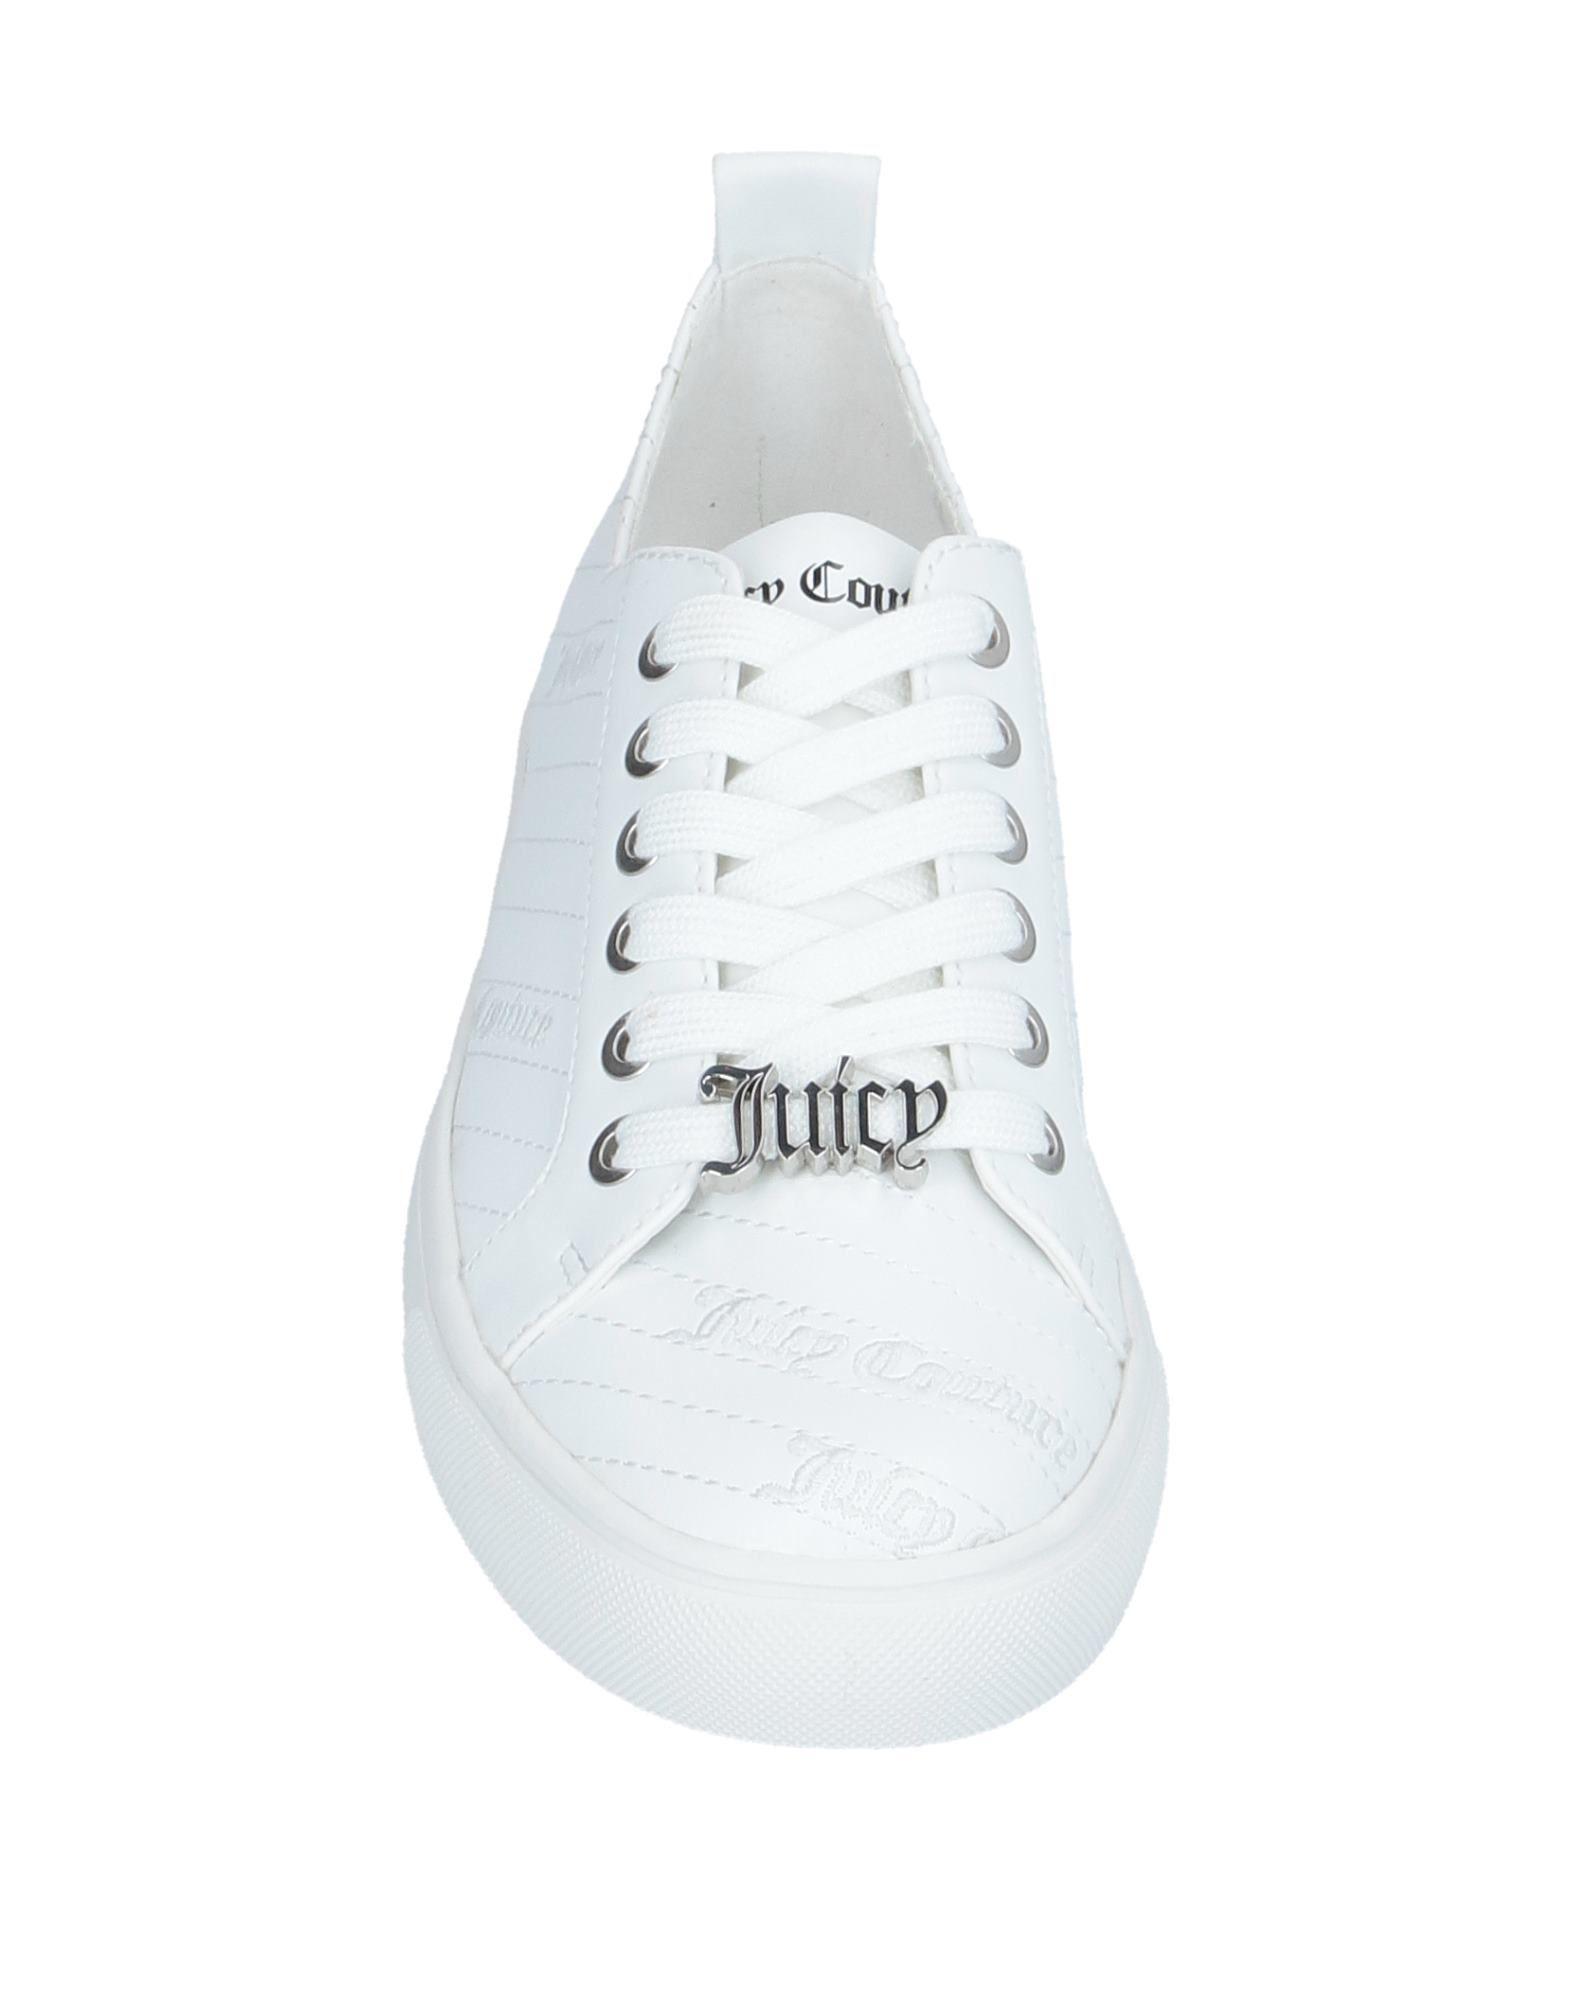 Juicy Couture Juicy Sneakers | Juicy couture shoes, Juicy couture, Sneakers